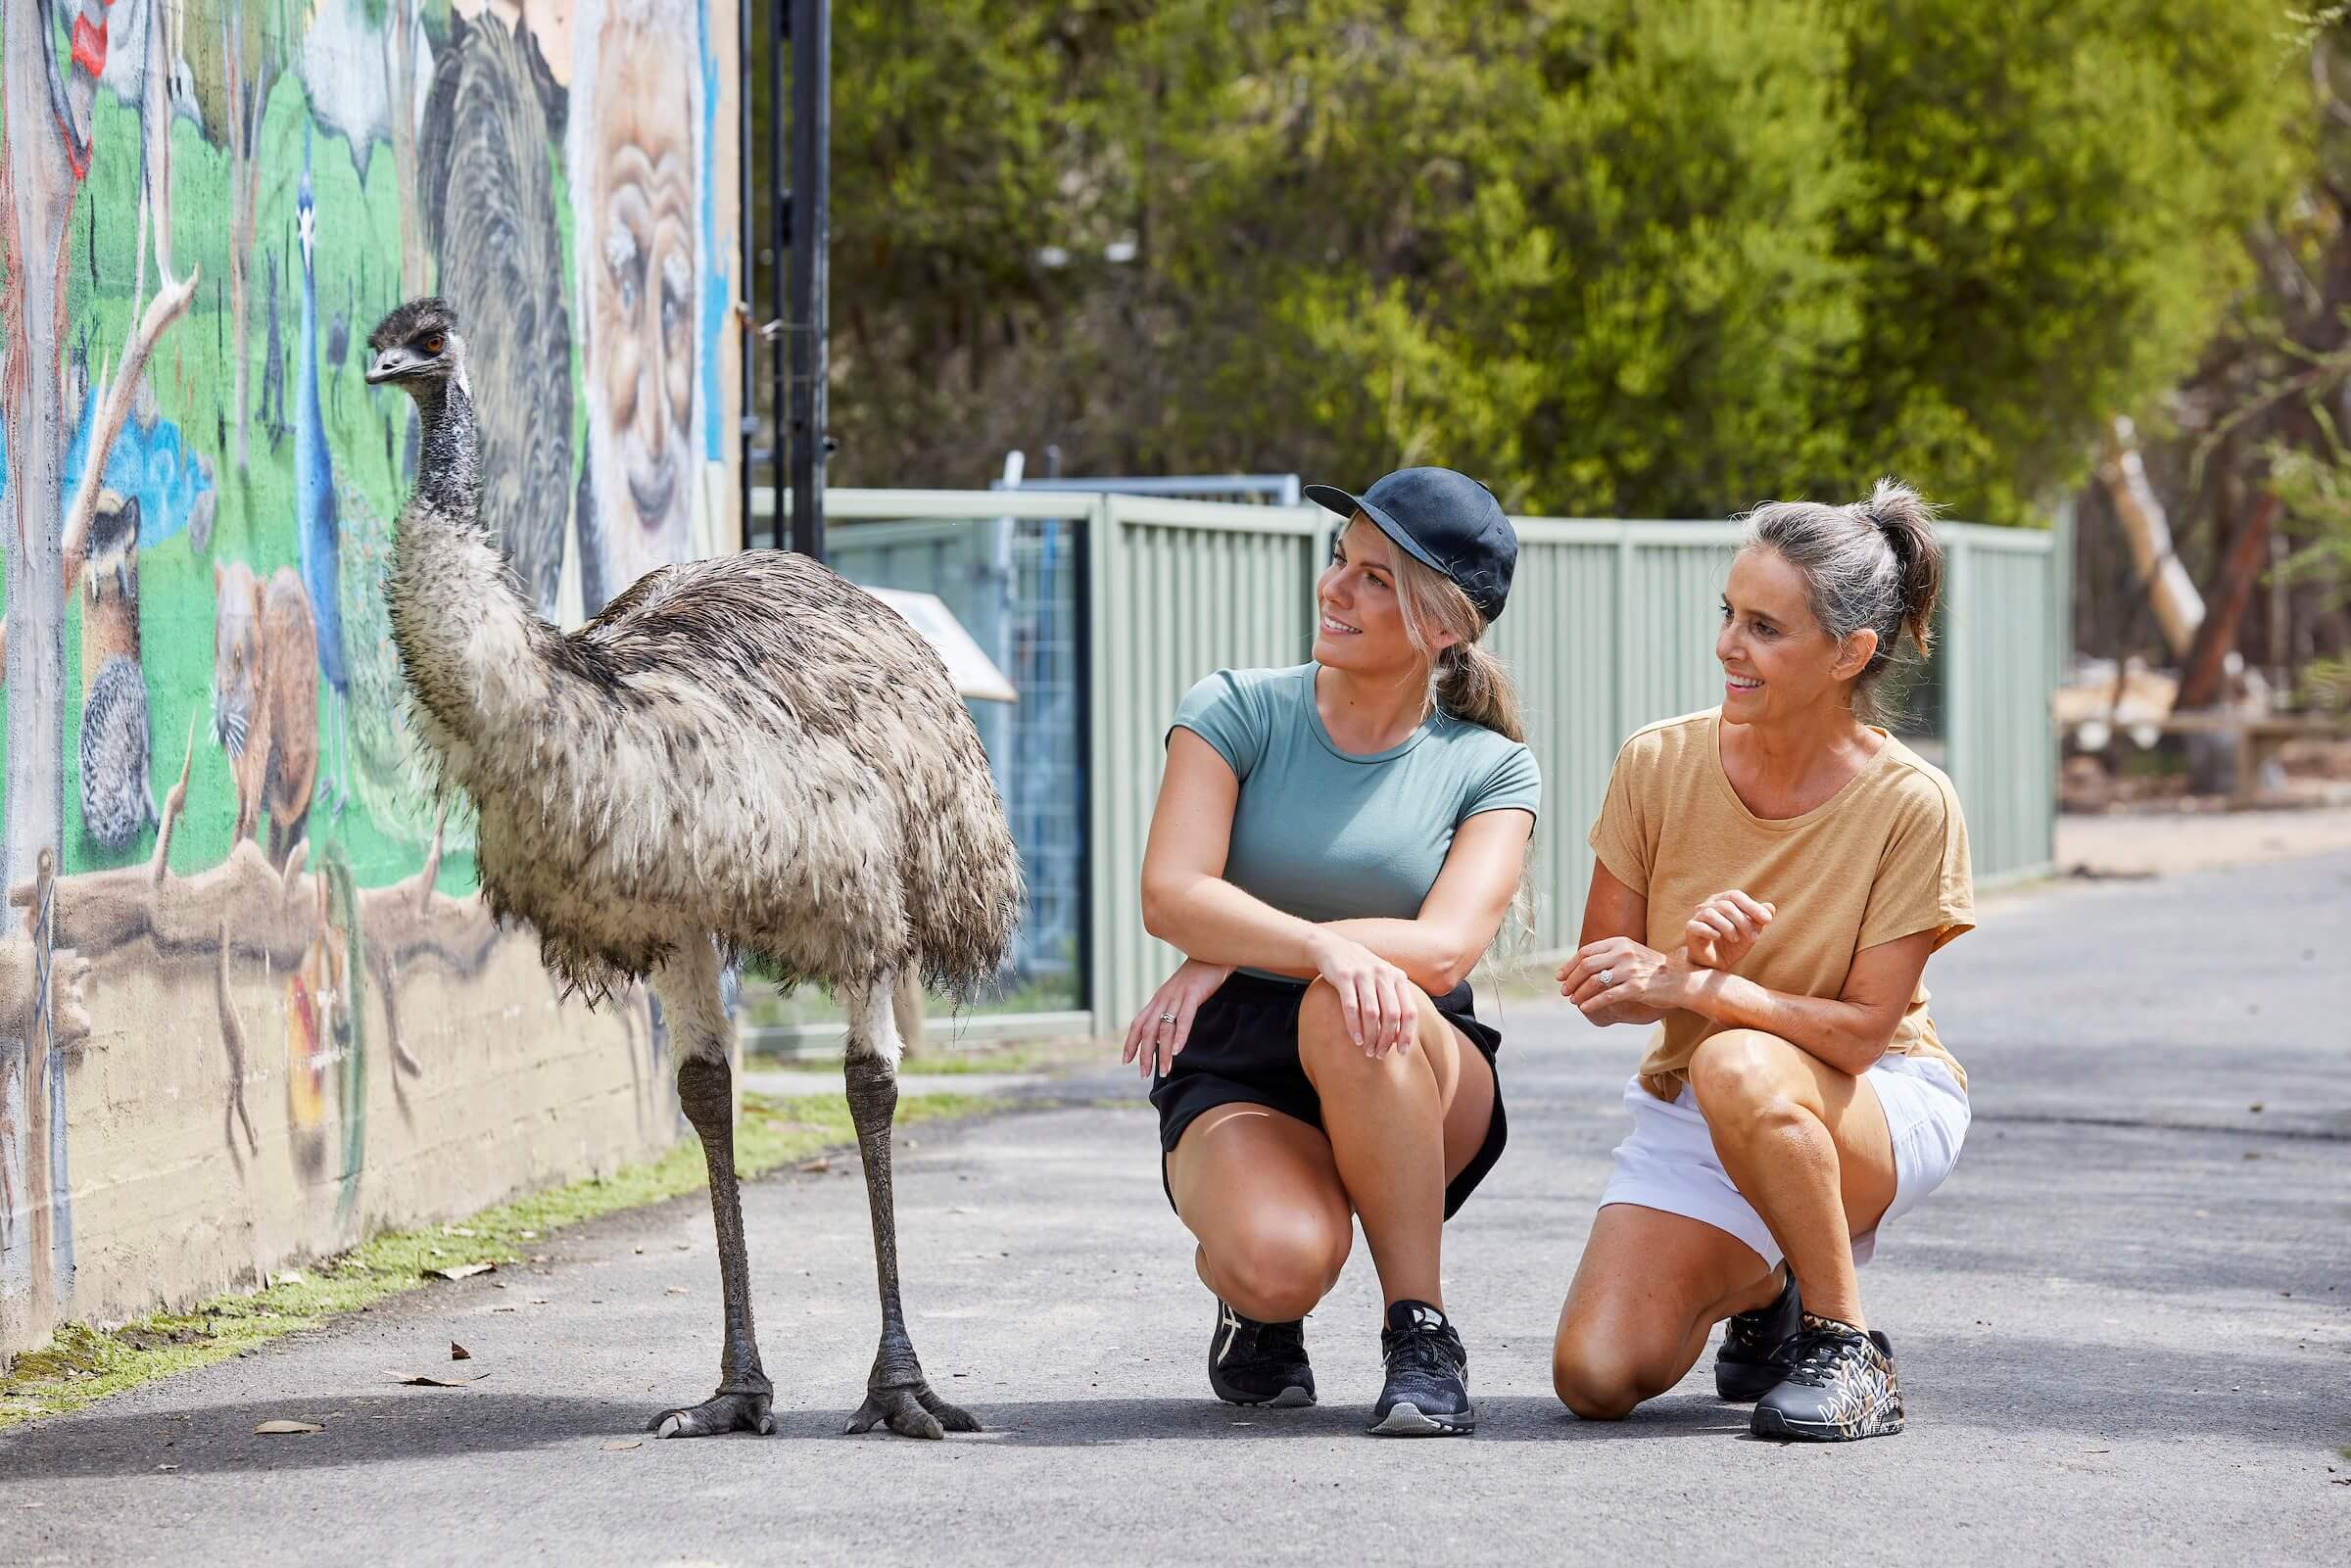 two tourists with free range emu n bush setting